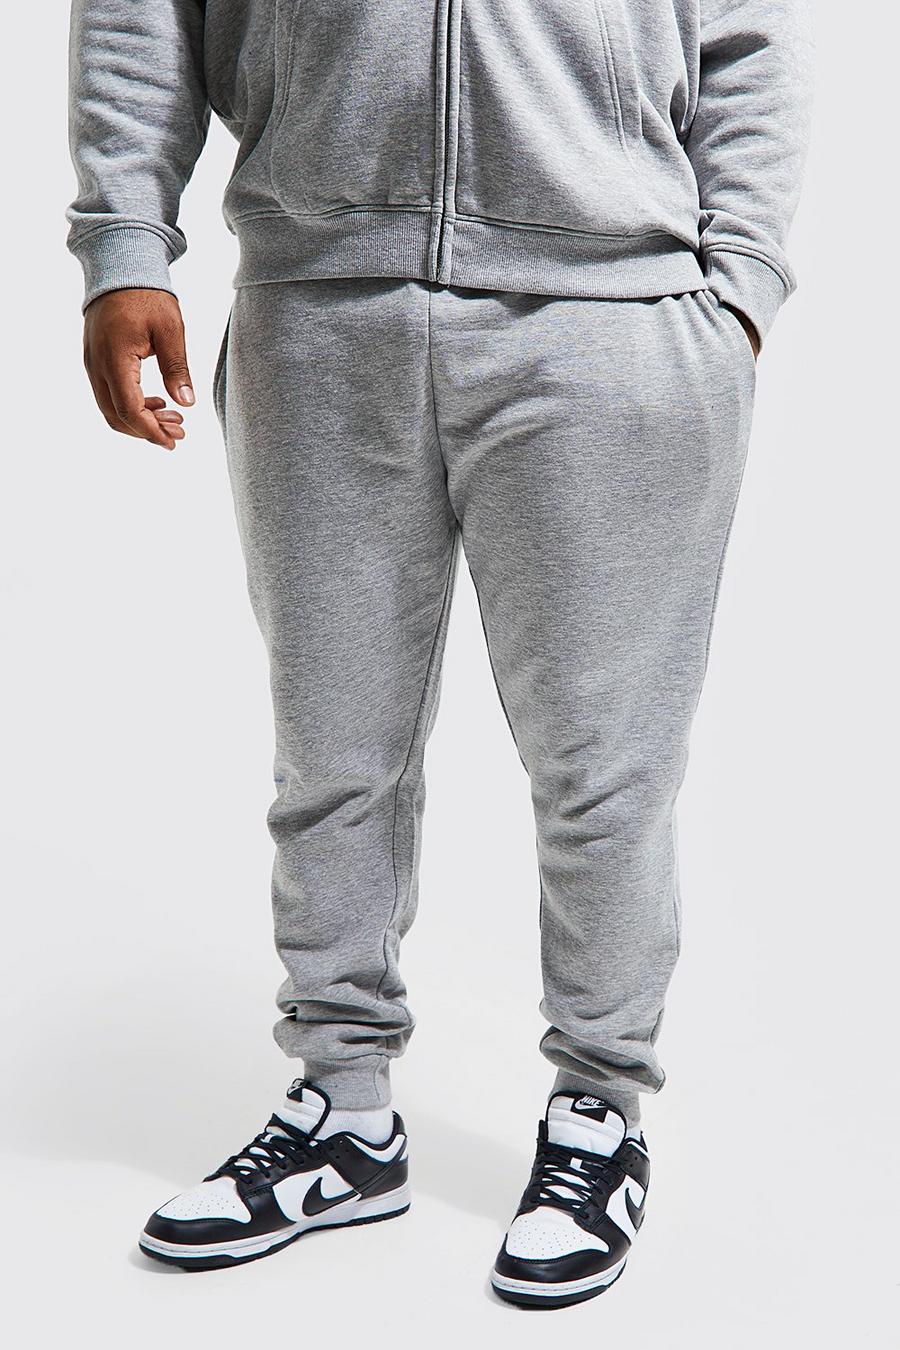 Pantaloni tuta Plus Size Basic Skinny Fit in cotone REEL, Grey marl grigio